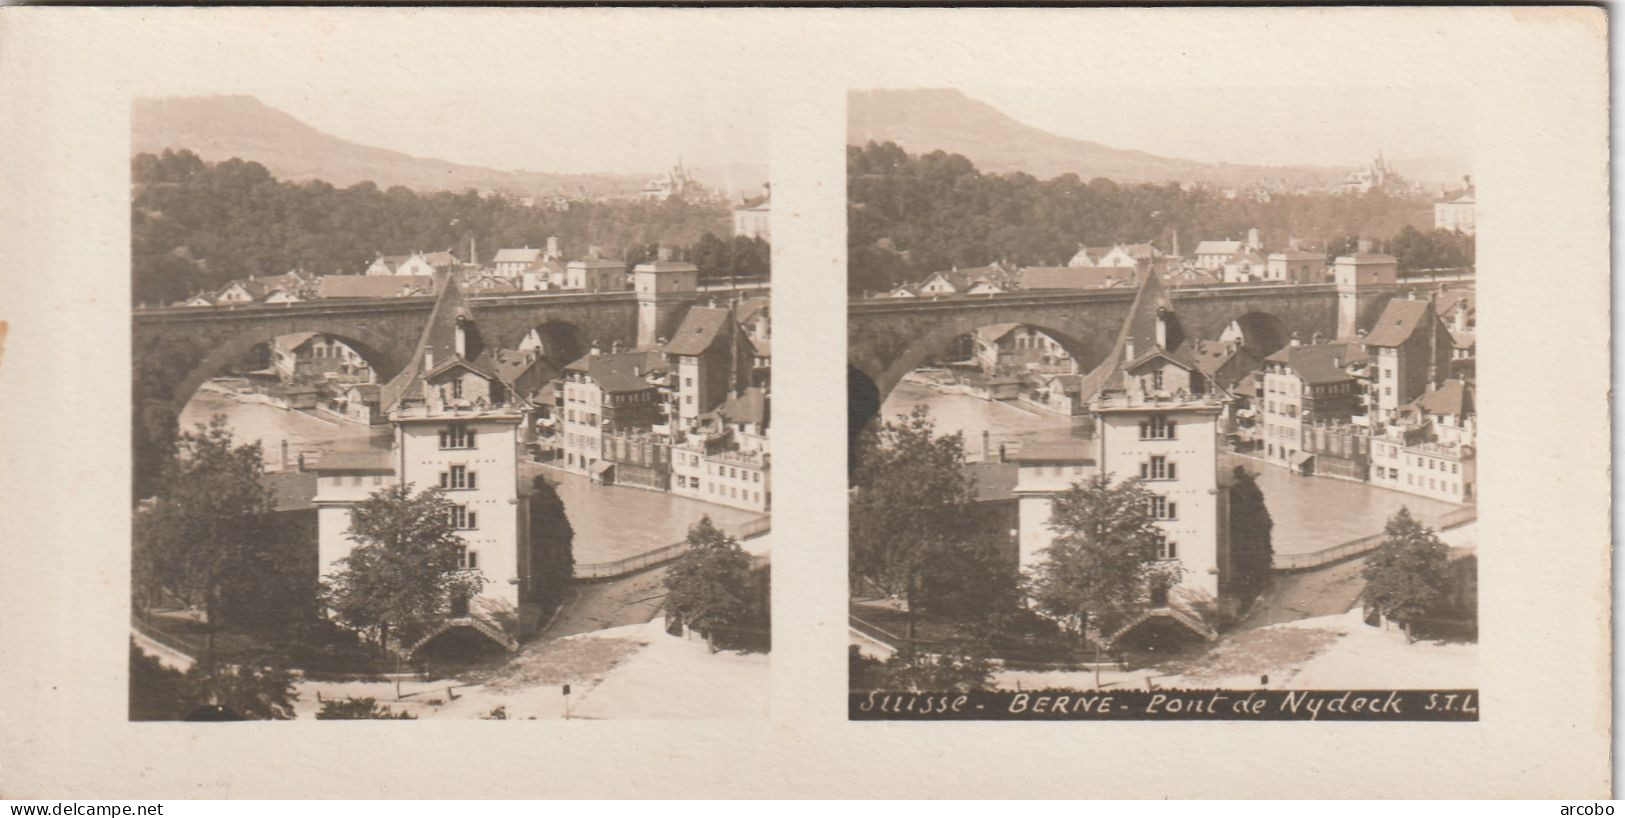 Suisse Berne Pont De Nydock - Stereoscope Cards